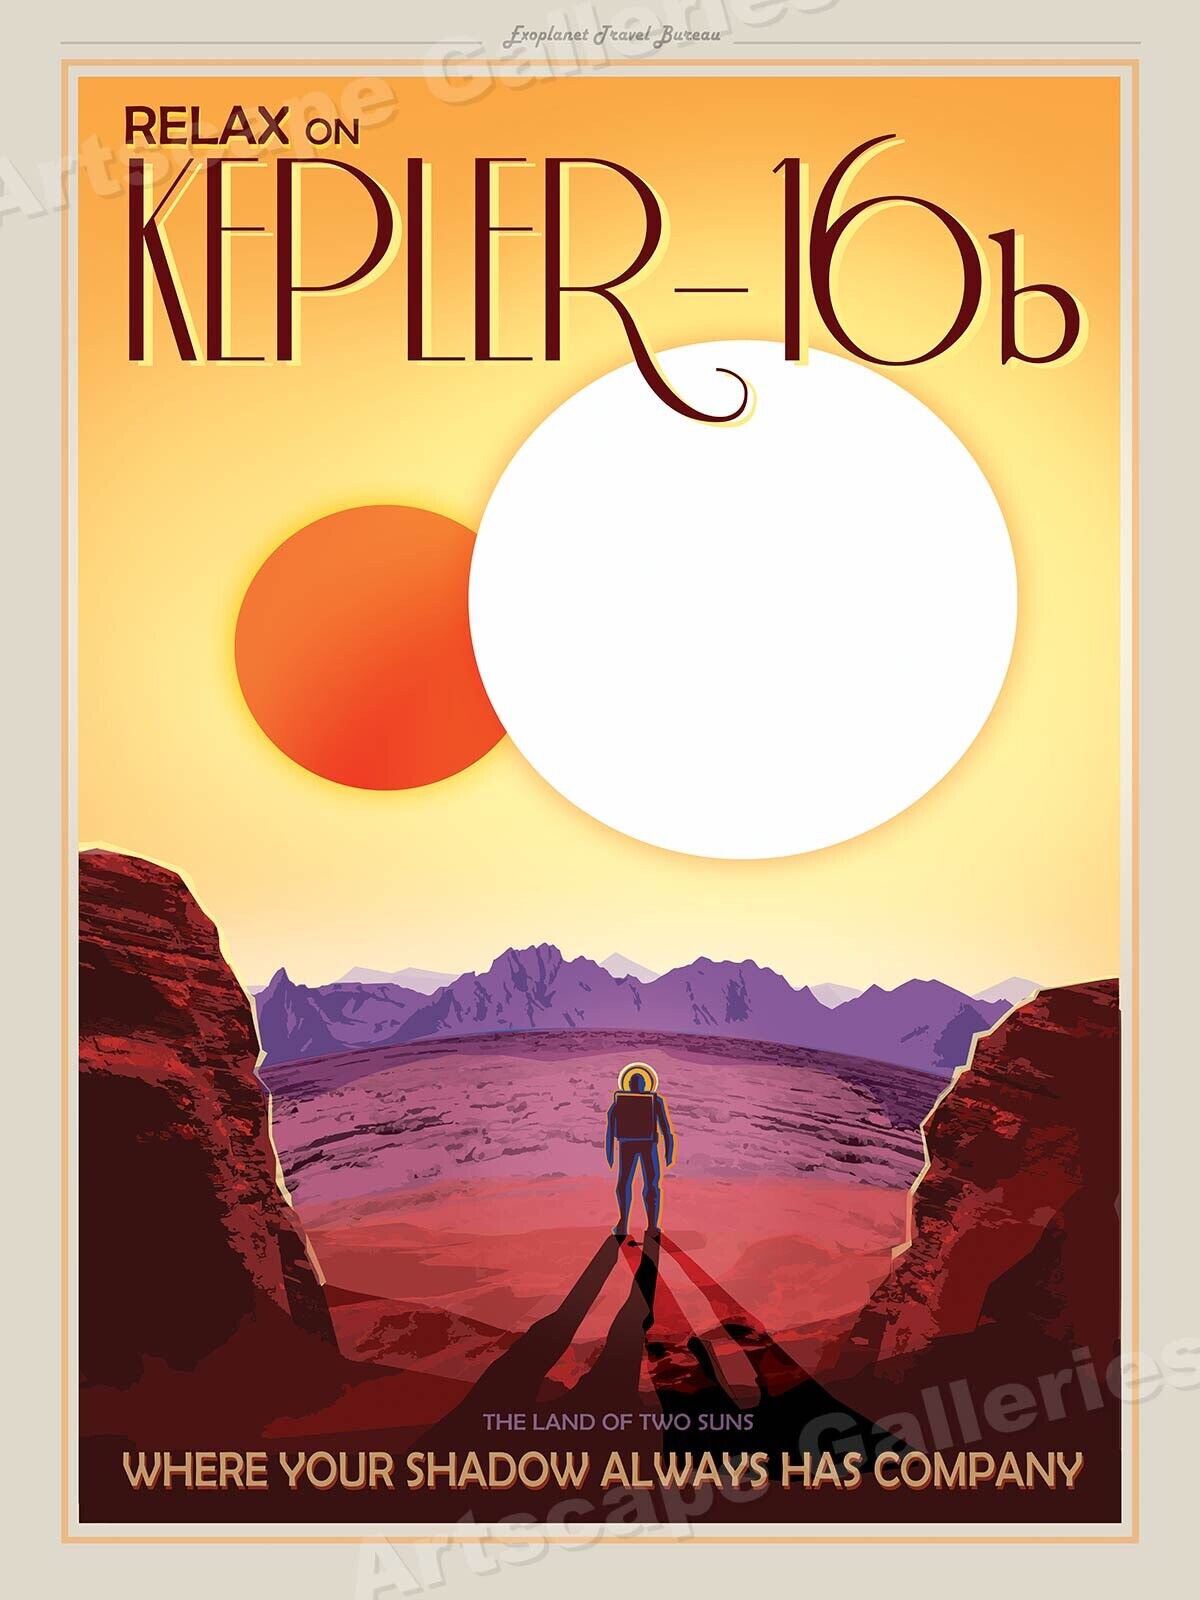 “Relax on Kepler-16b” Retro ExoPlanet Exploration NASA Travel Poster - 24x32